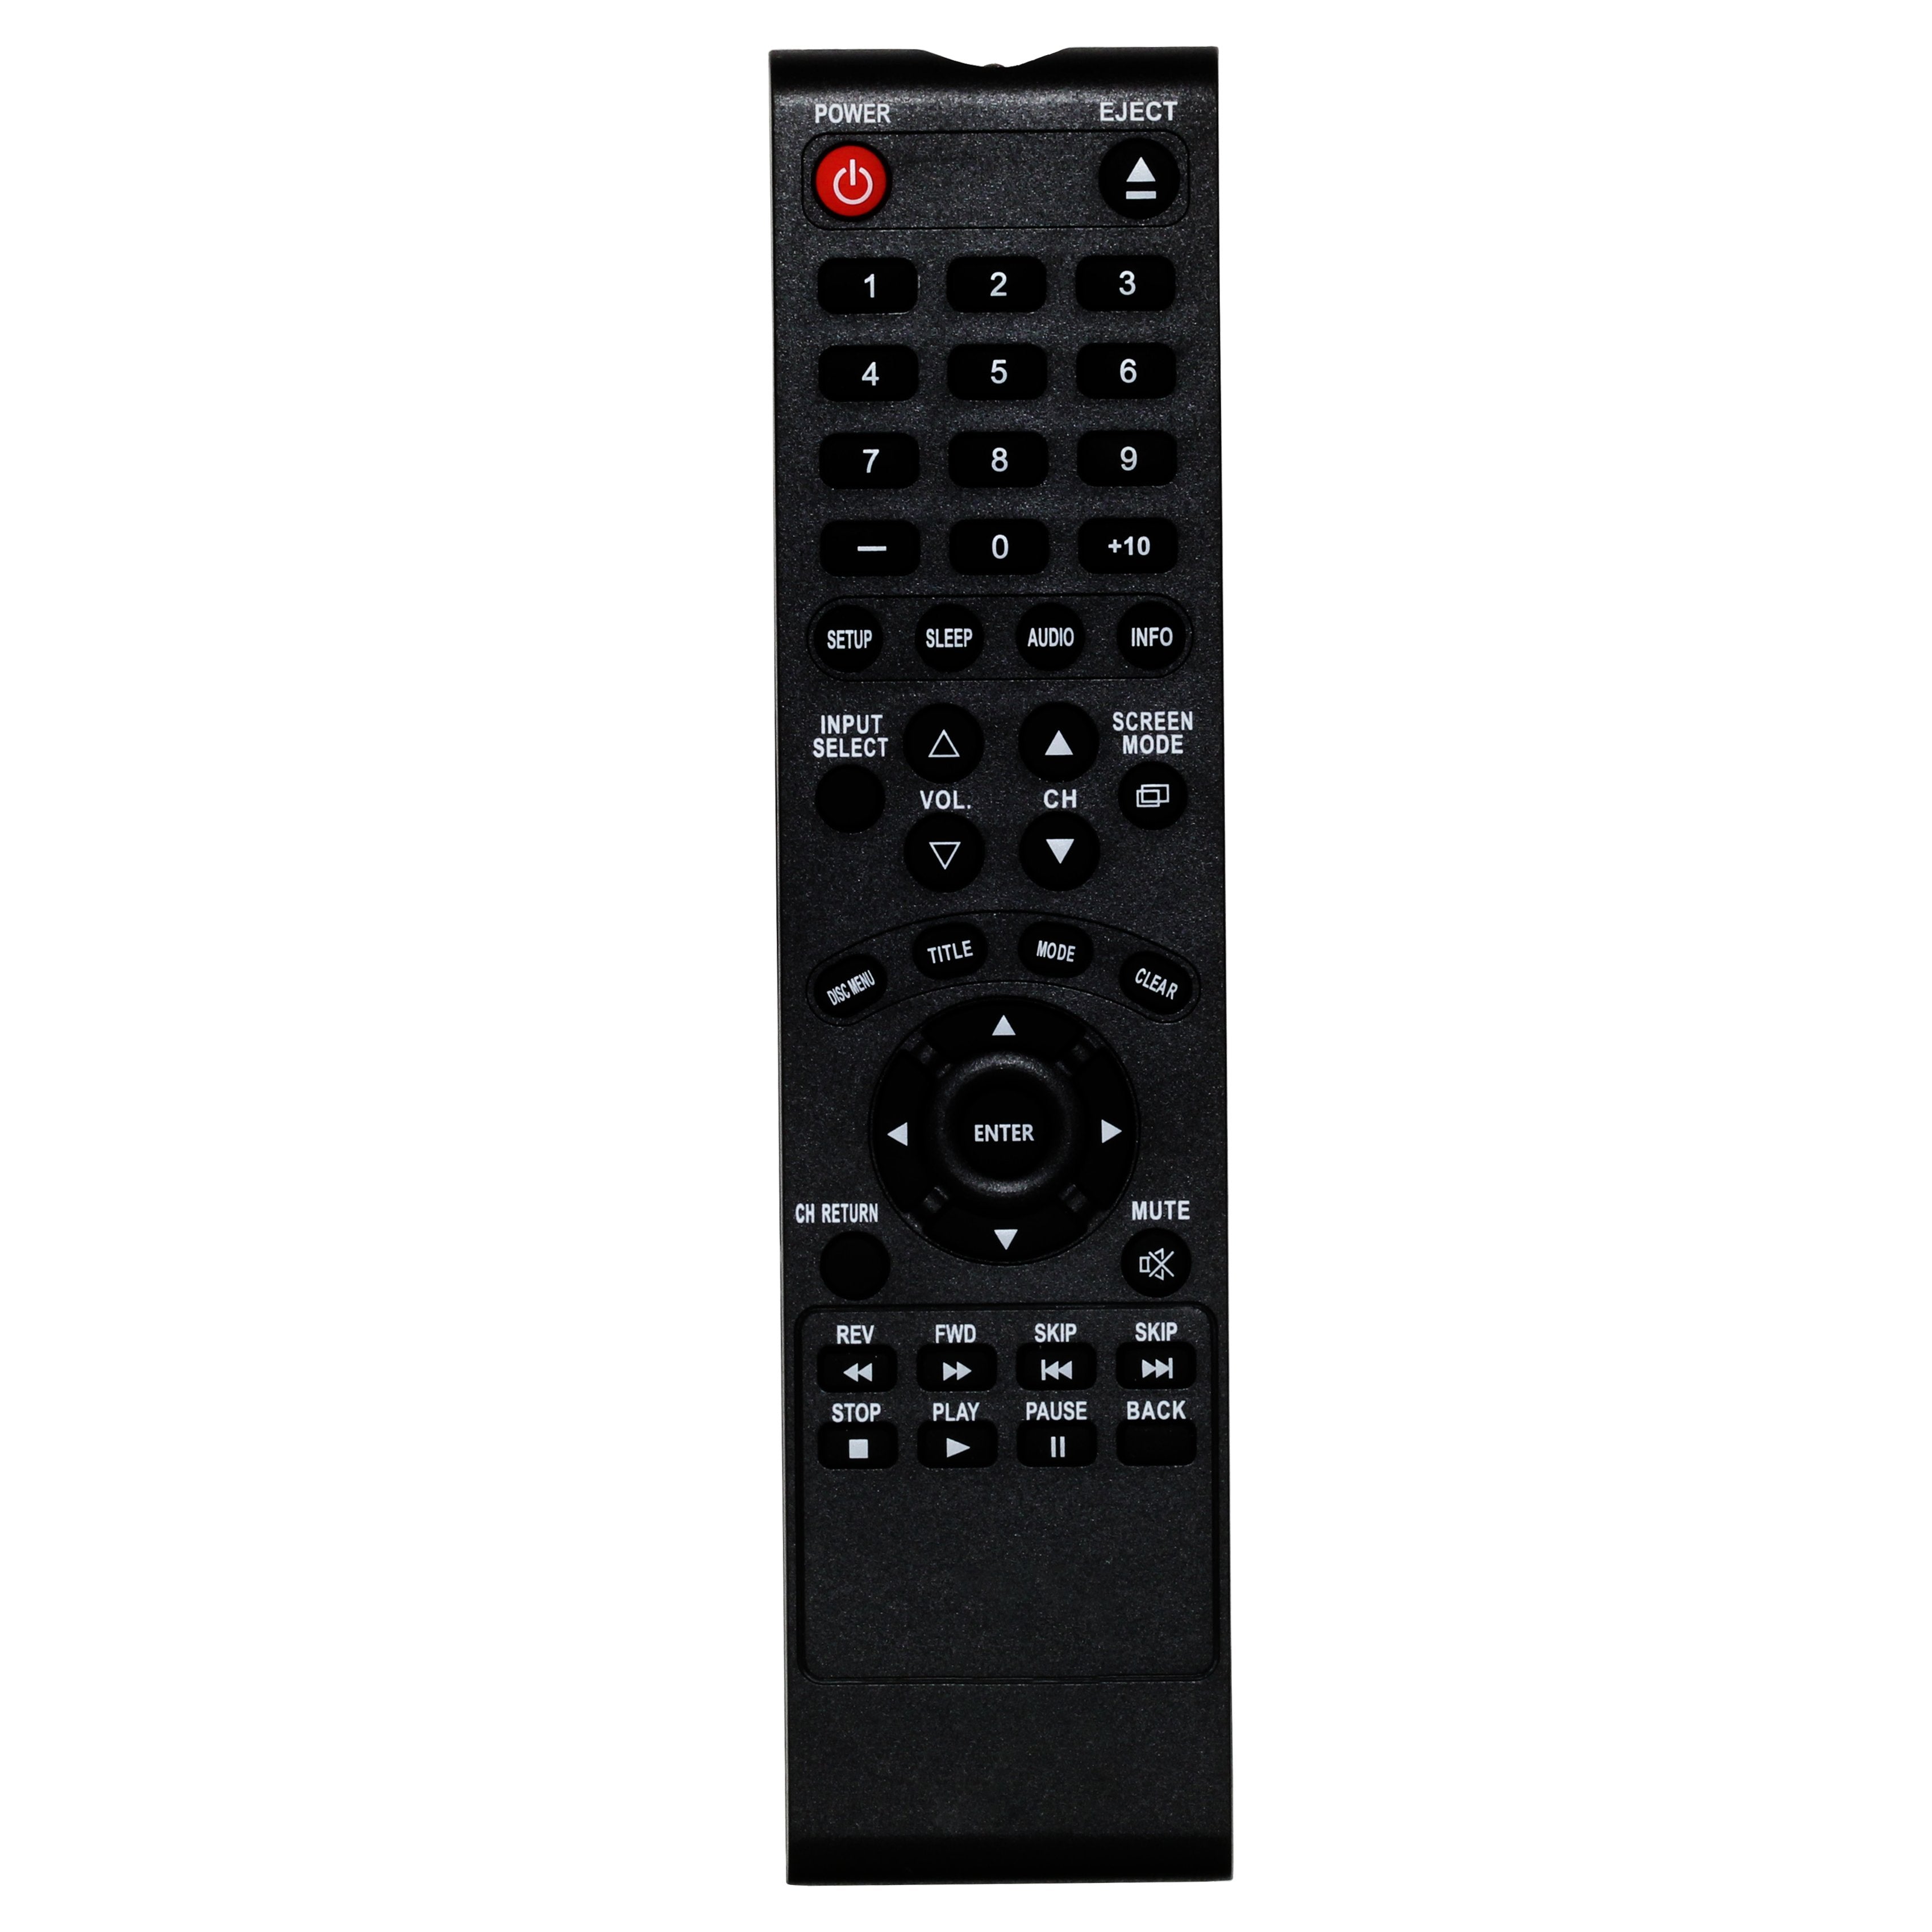 Sylvania RXD168WA02  TV Remote